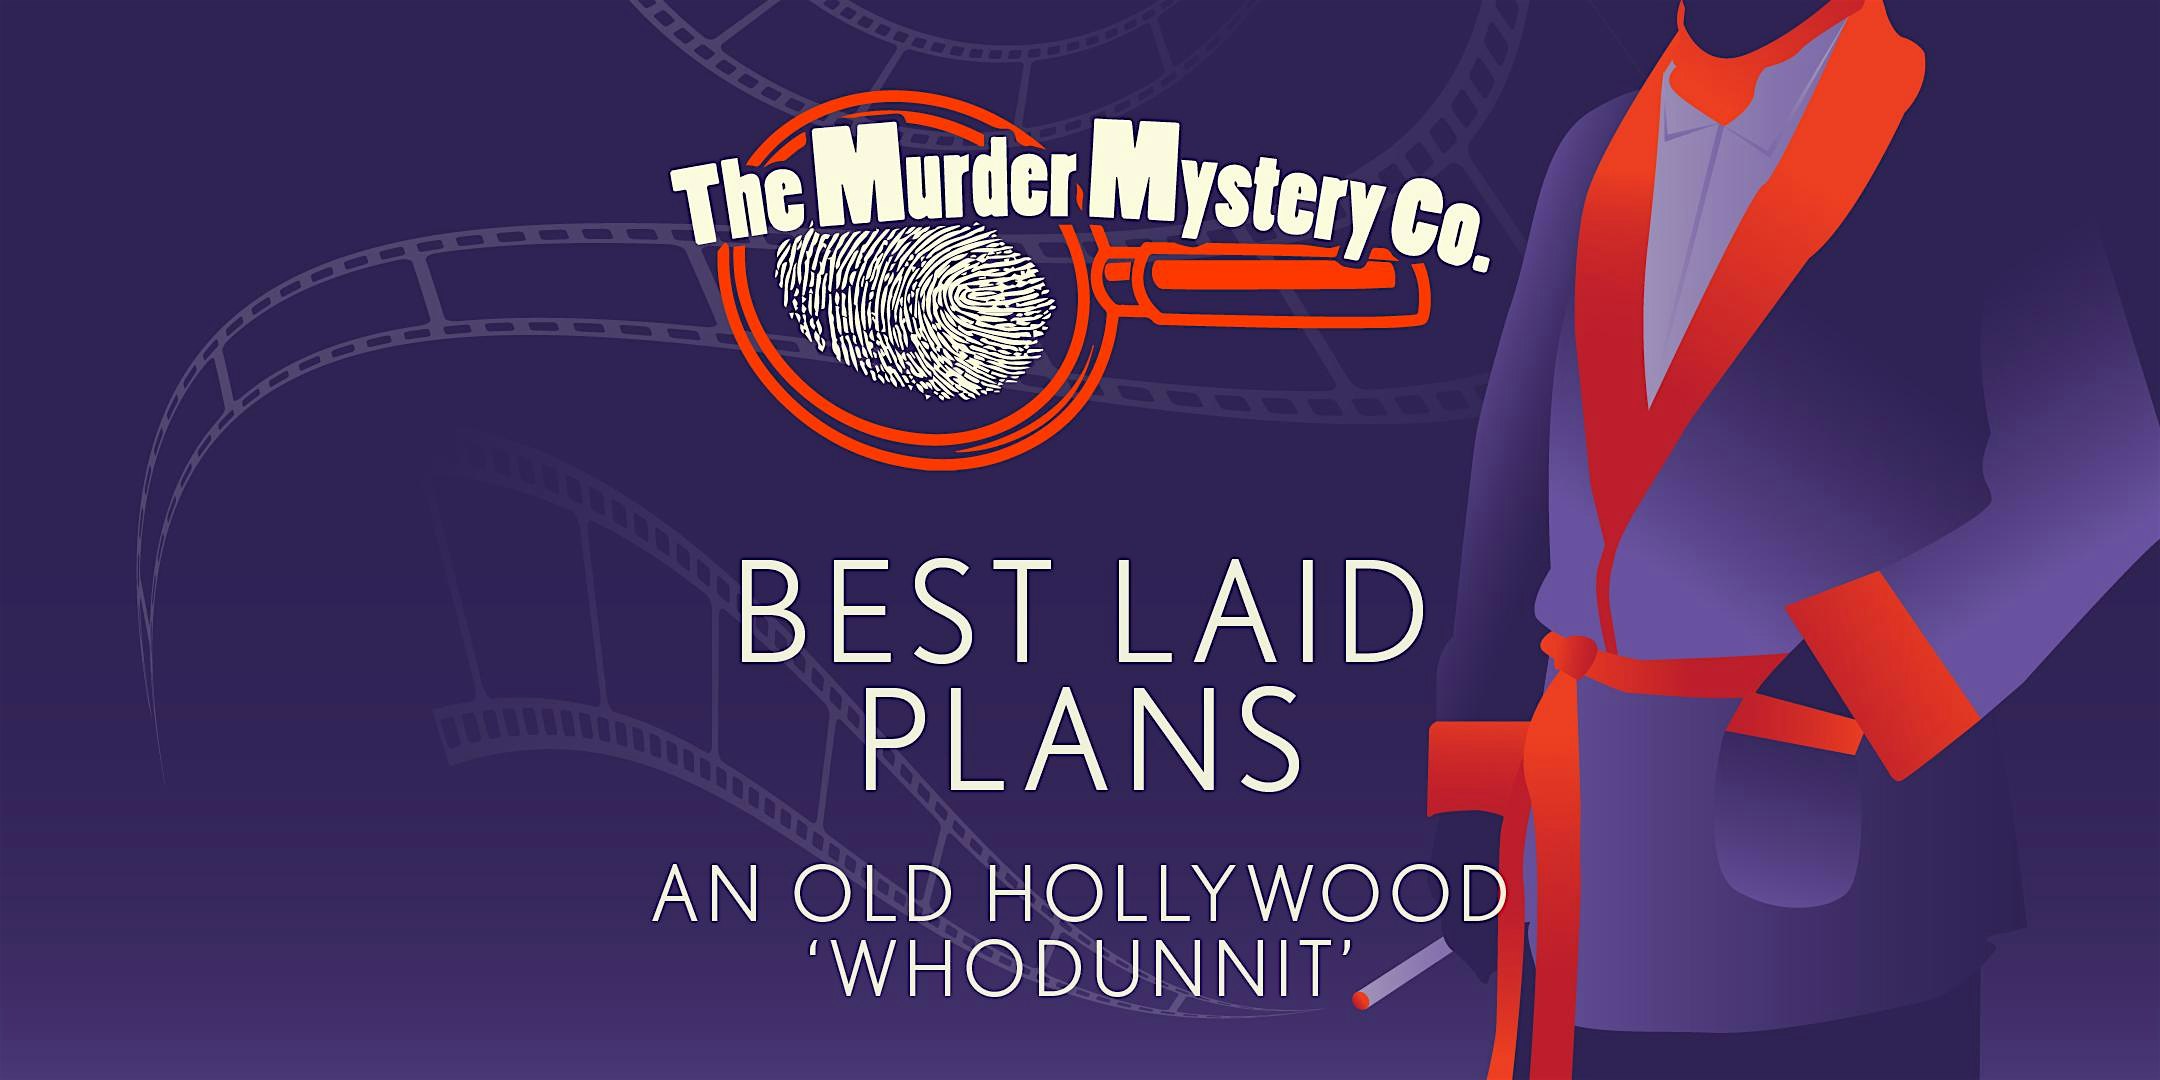 Murder Mystery Dinner Theater Show in Riverside: Best Laid Plans